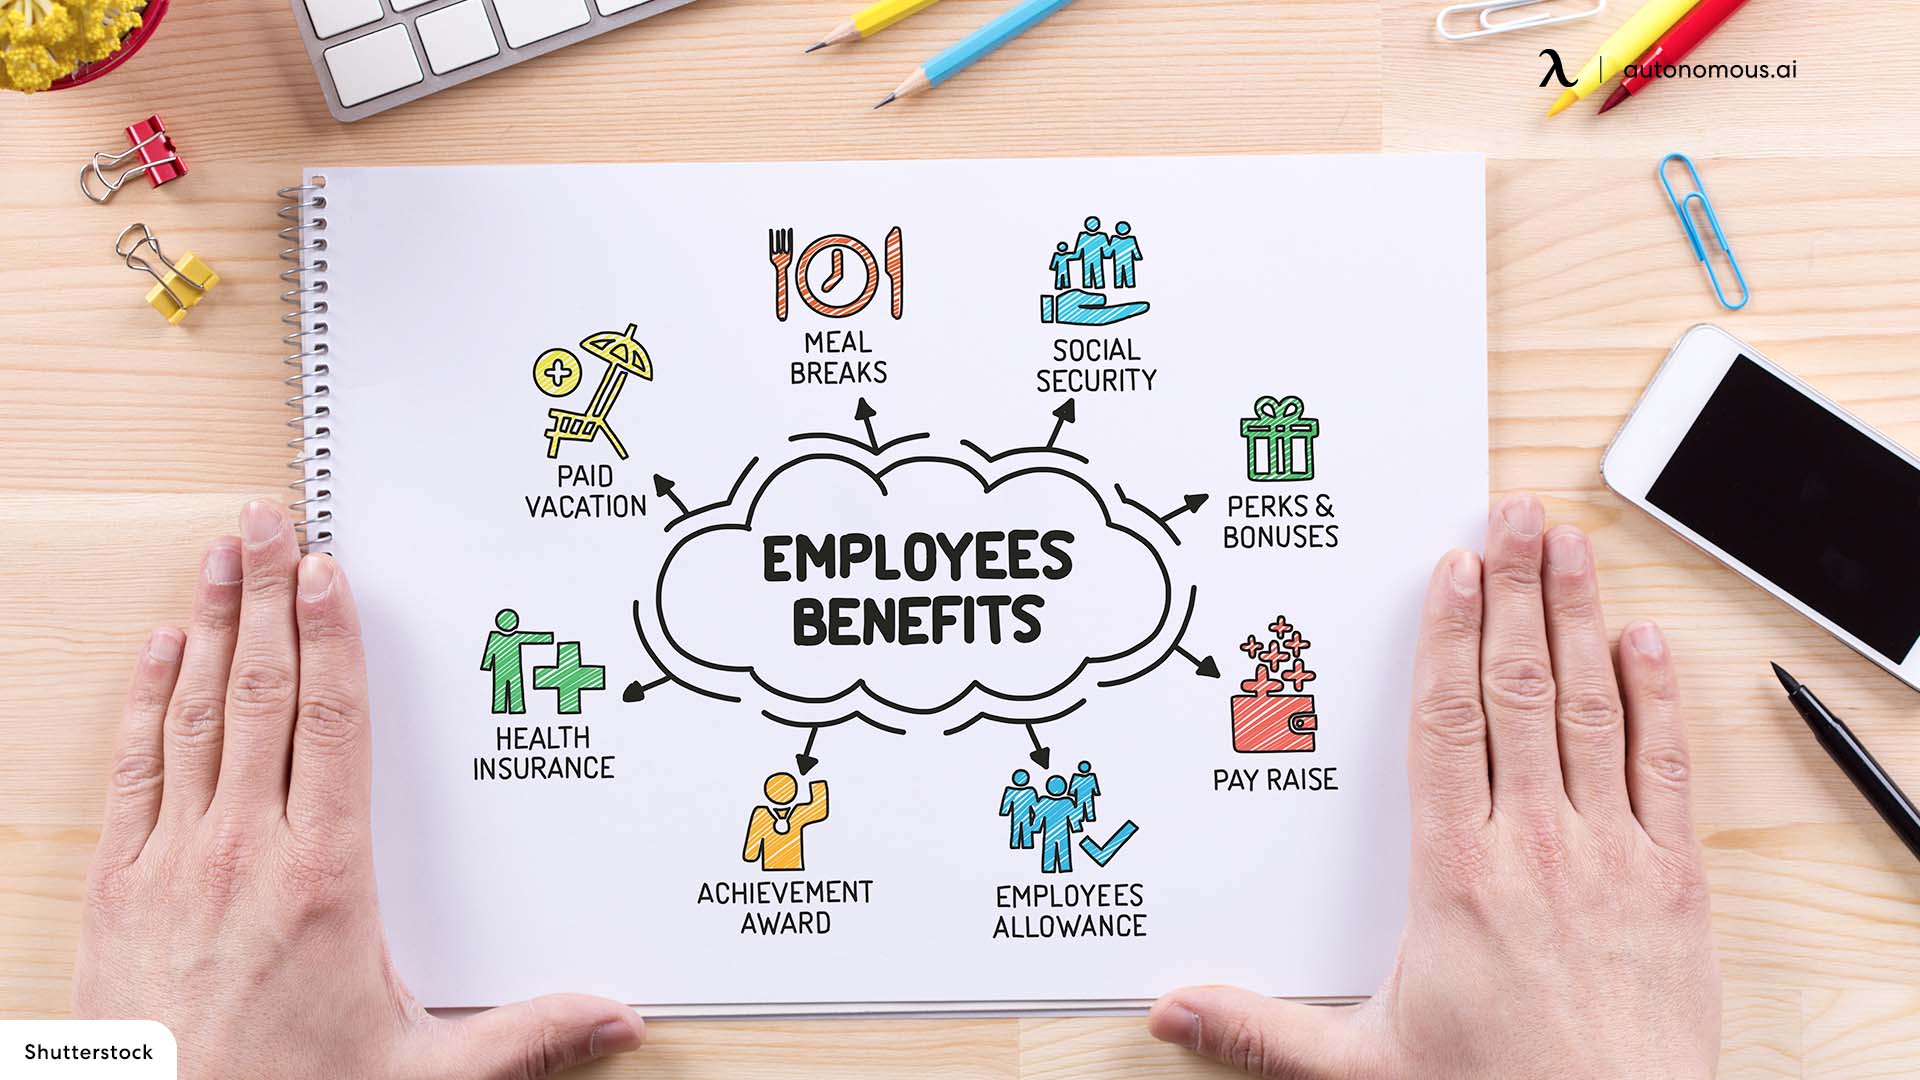 Benefits of Employee Perks